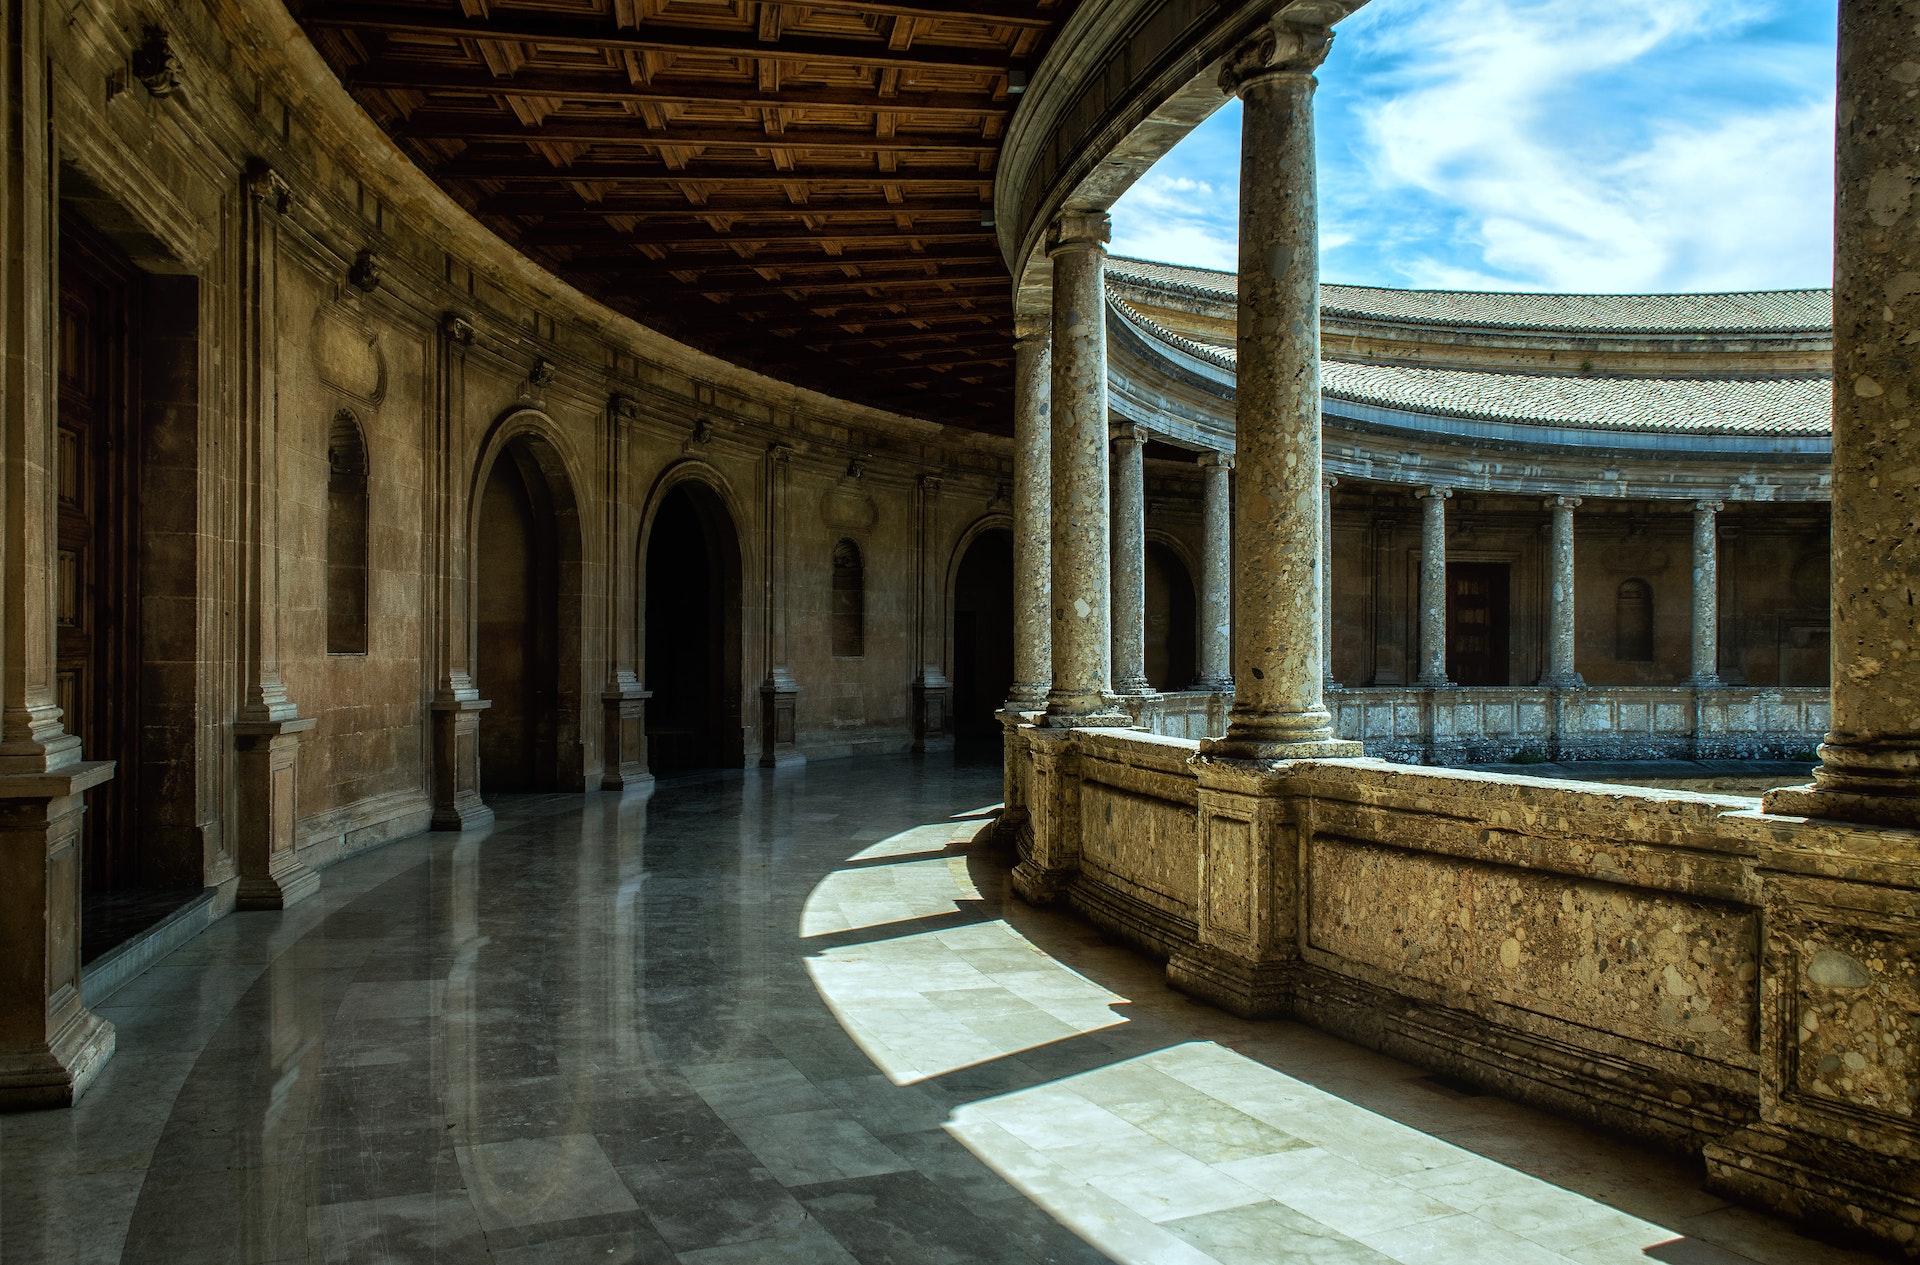 Hallway of the alhambra